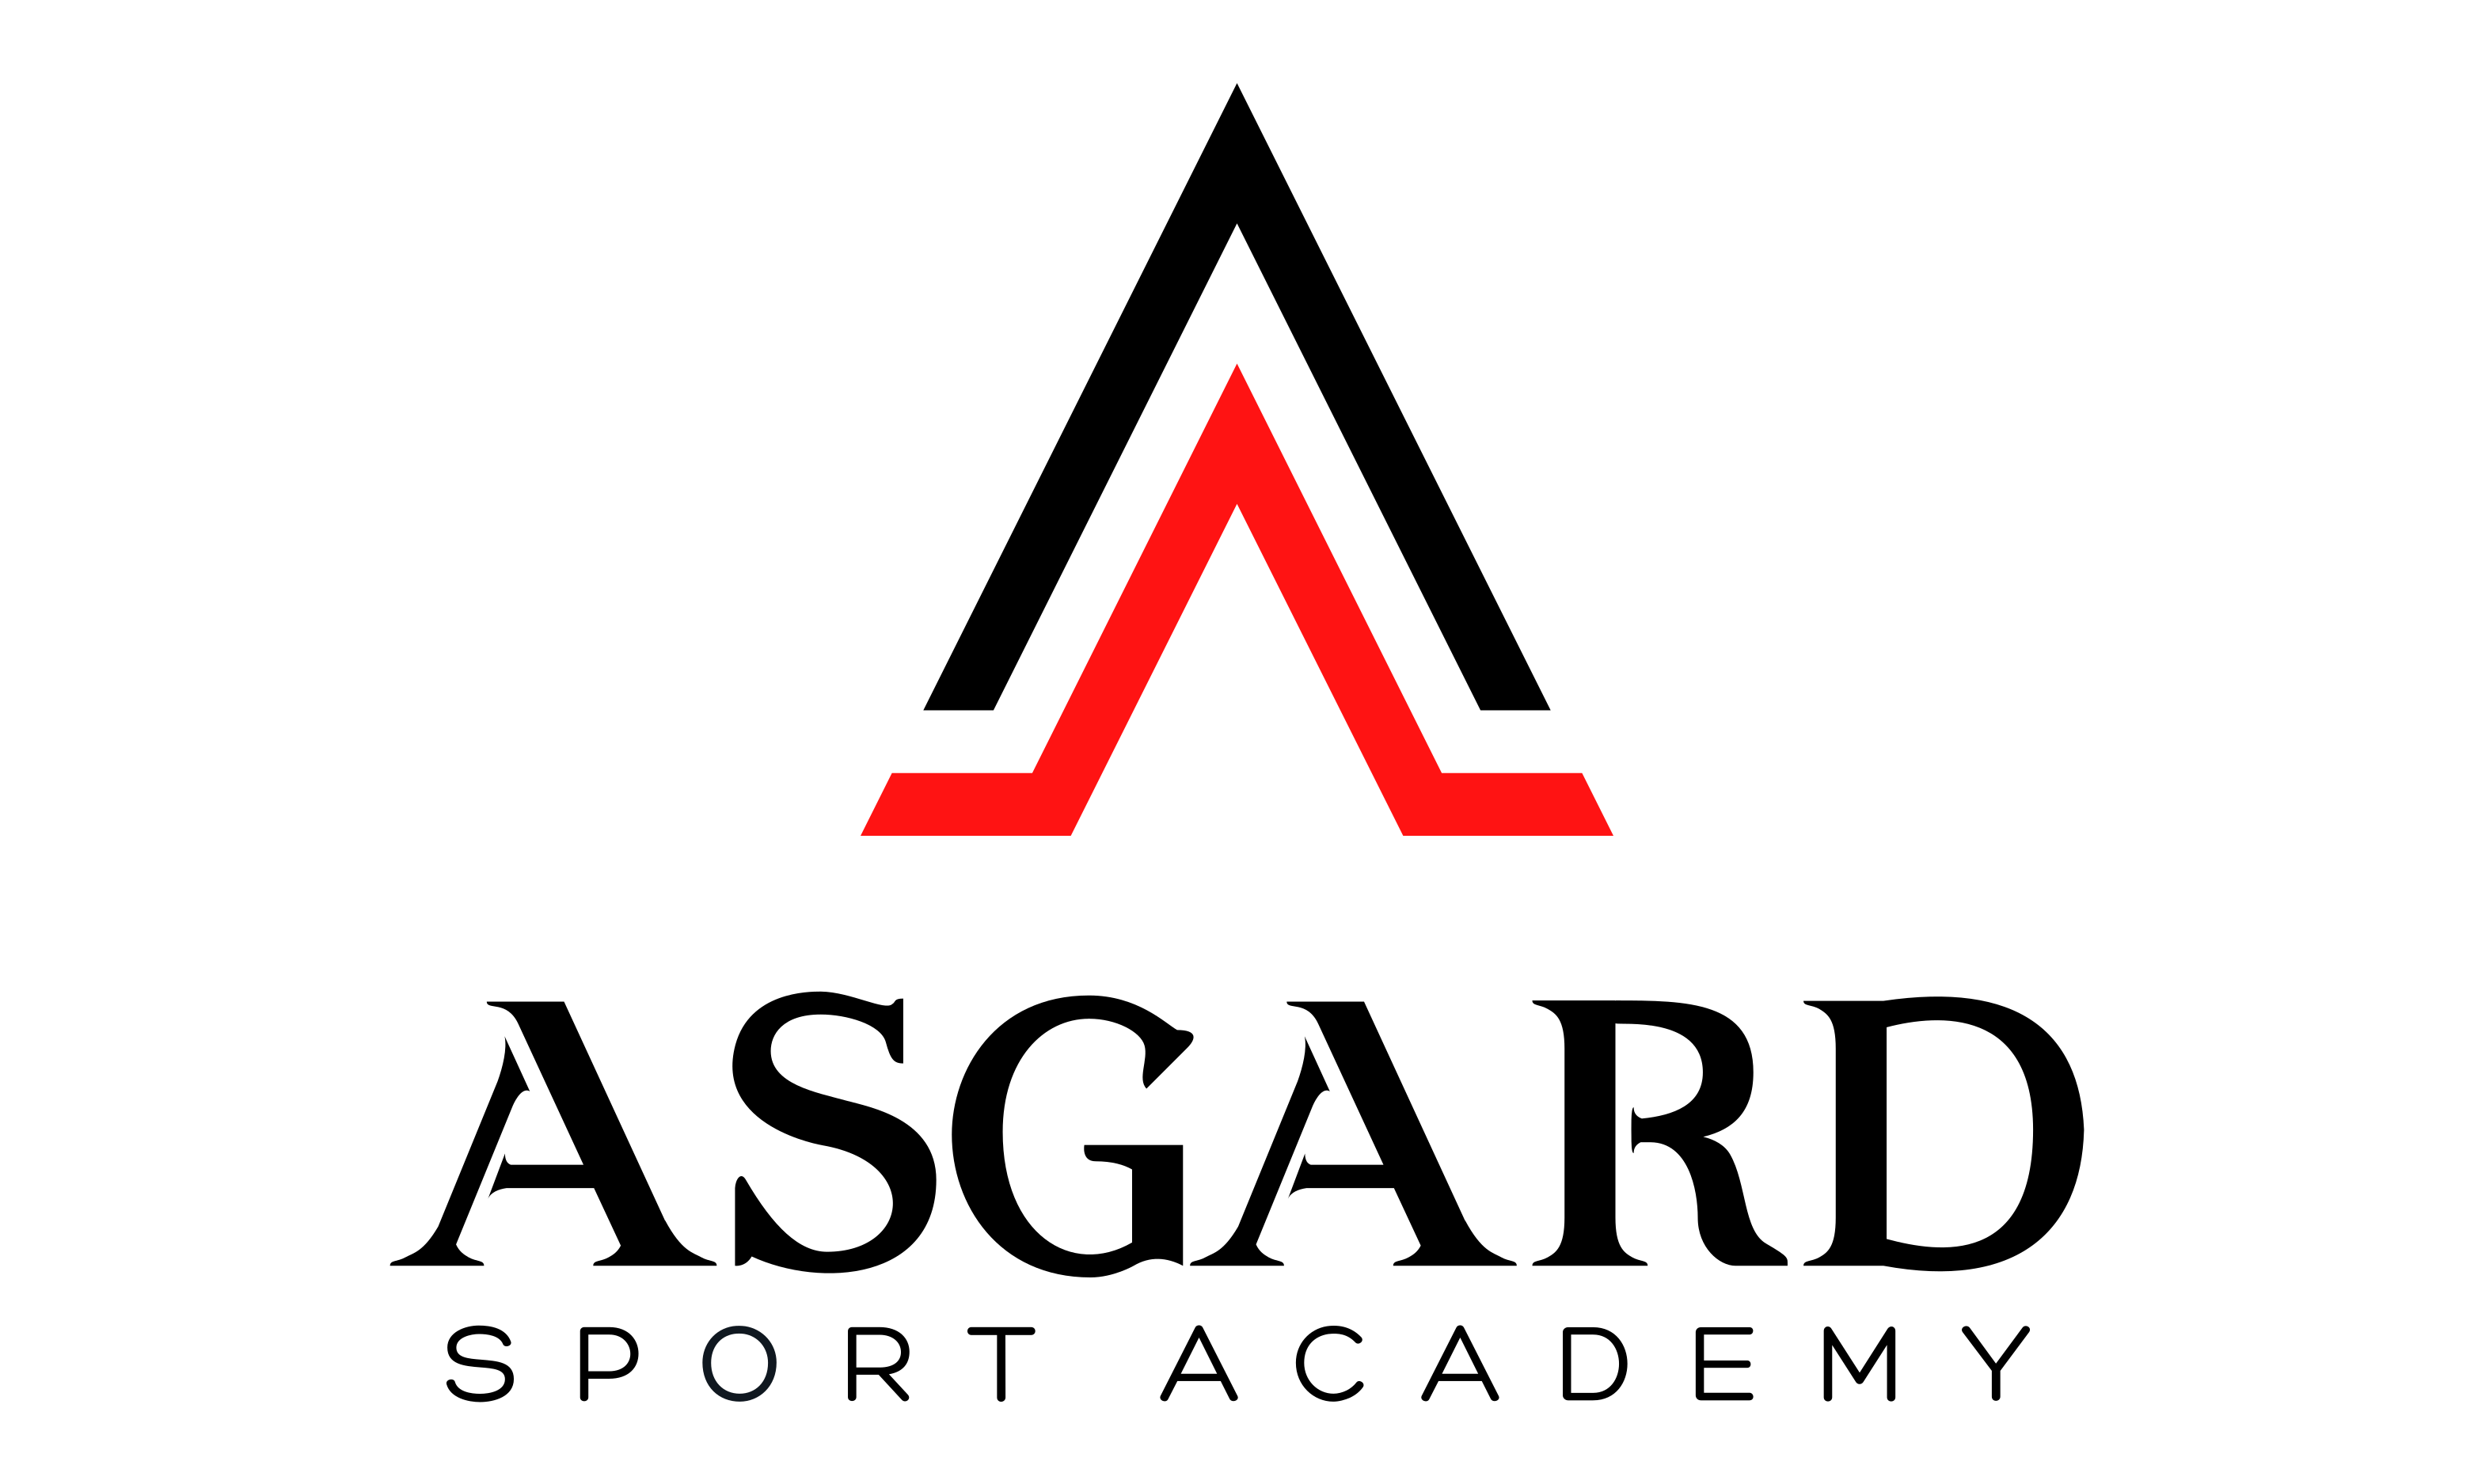 www.asgardsportacademy.com